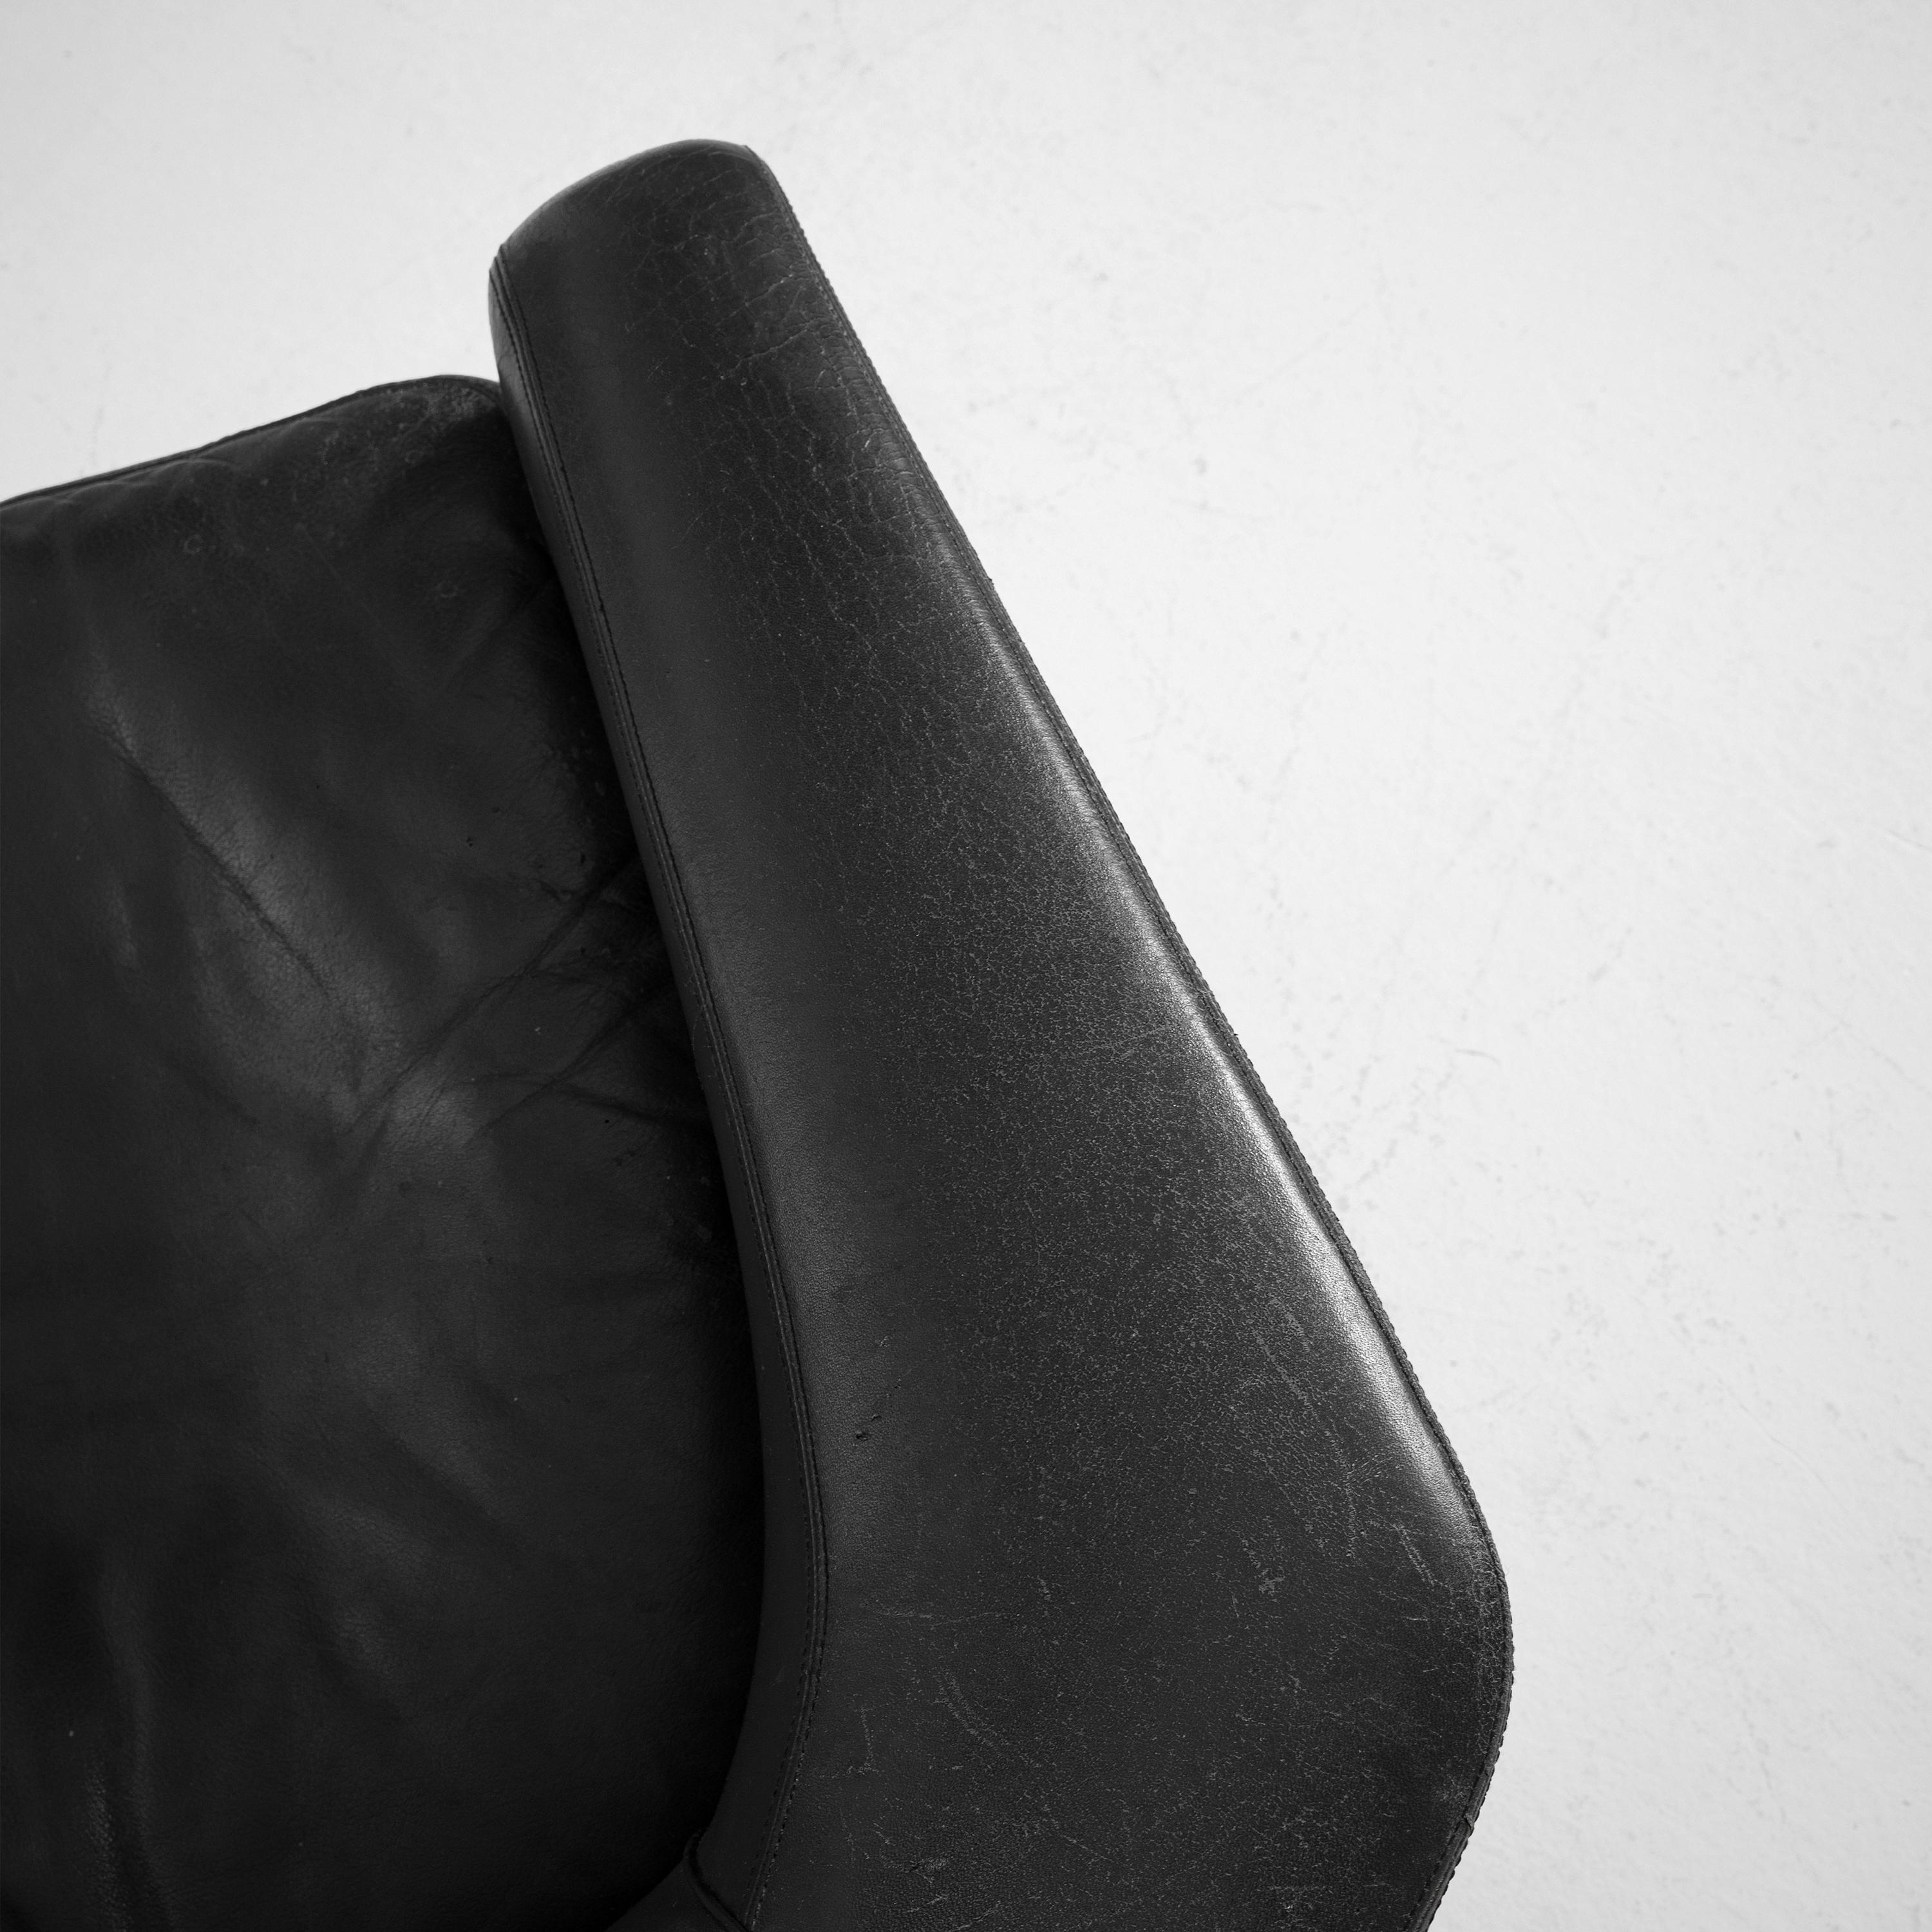 Ib Kofod-Larsen Lounge Chair Model 'PD30' in Teak and Leather 2